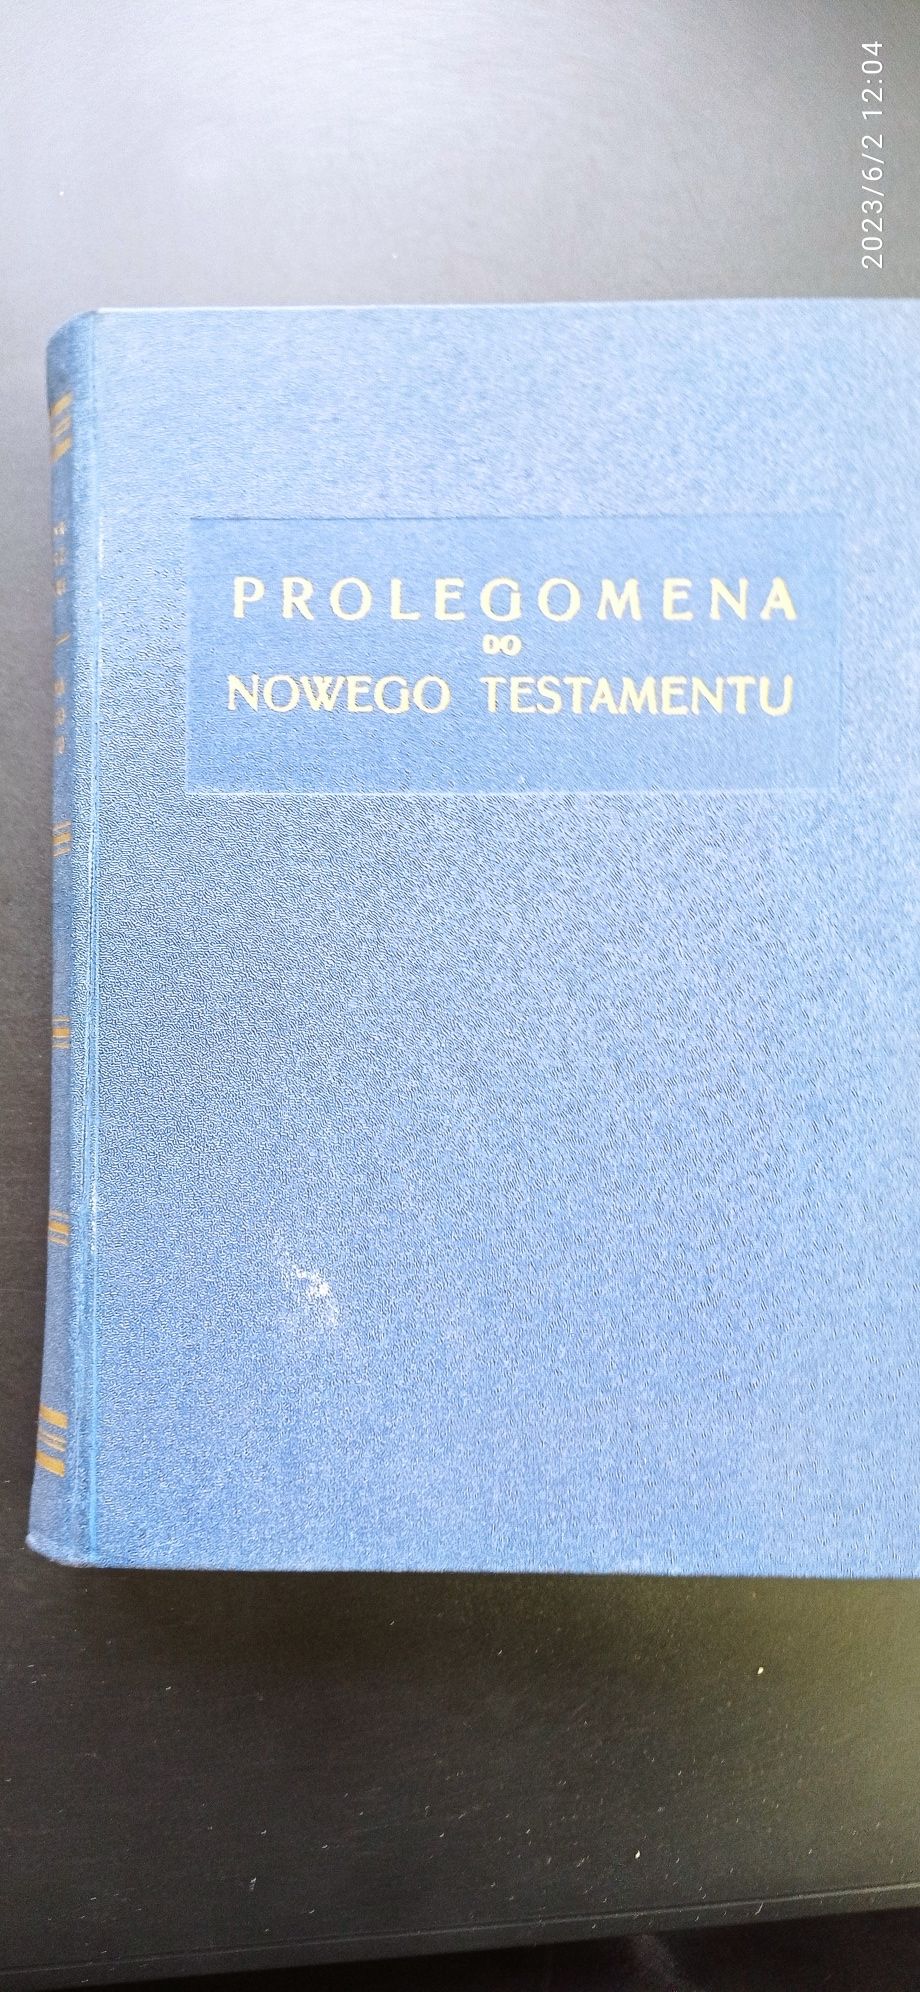 Prolegomena do Nowego Testamentu. Dąbrowski.